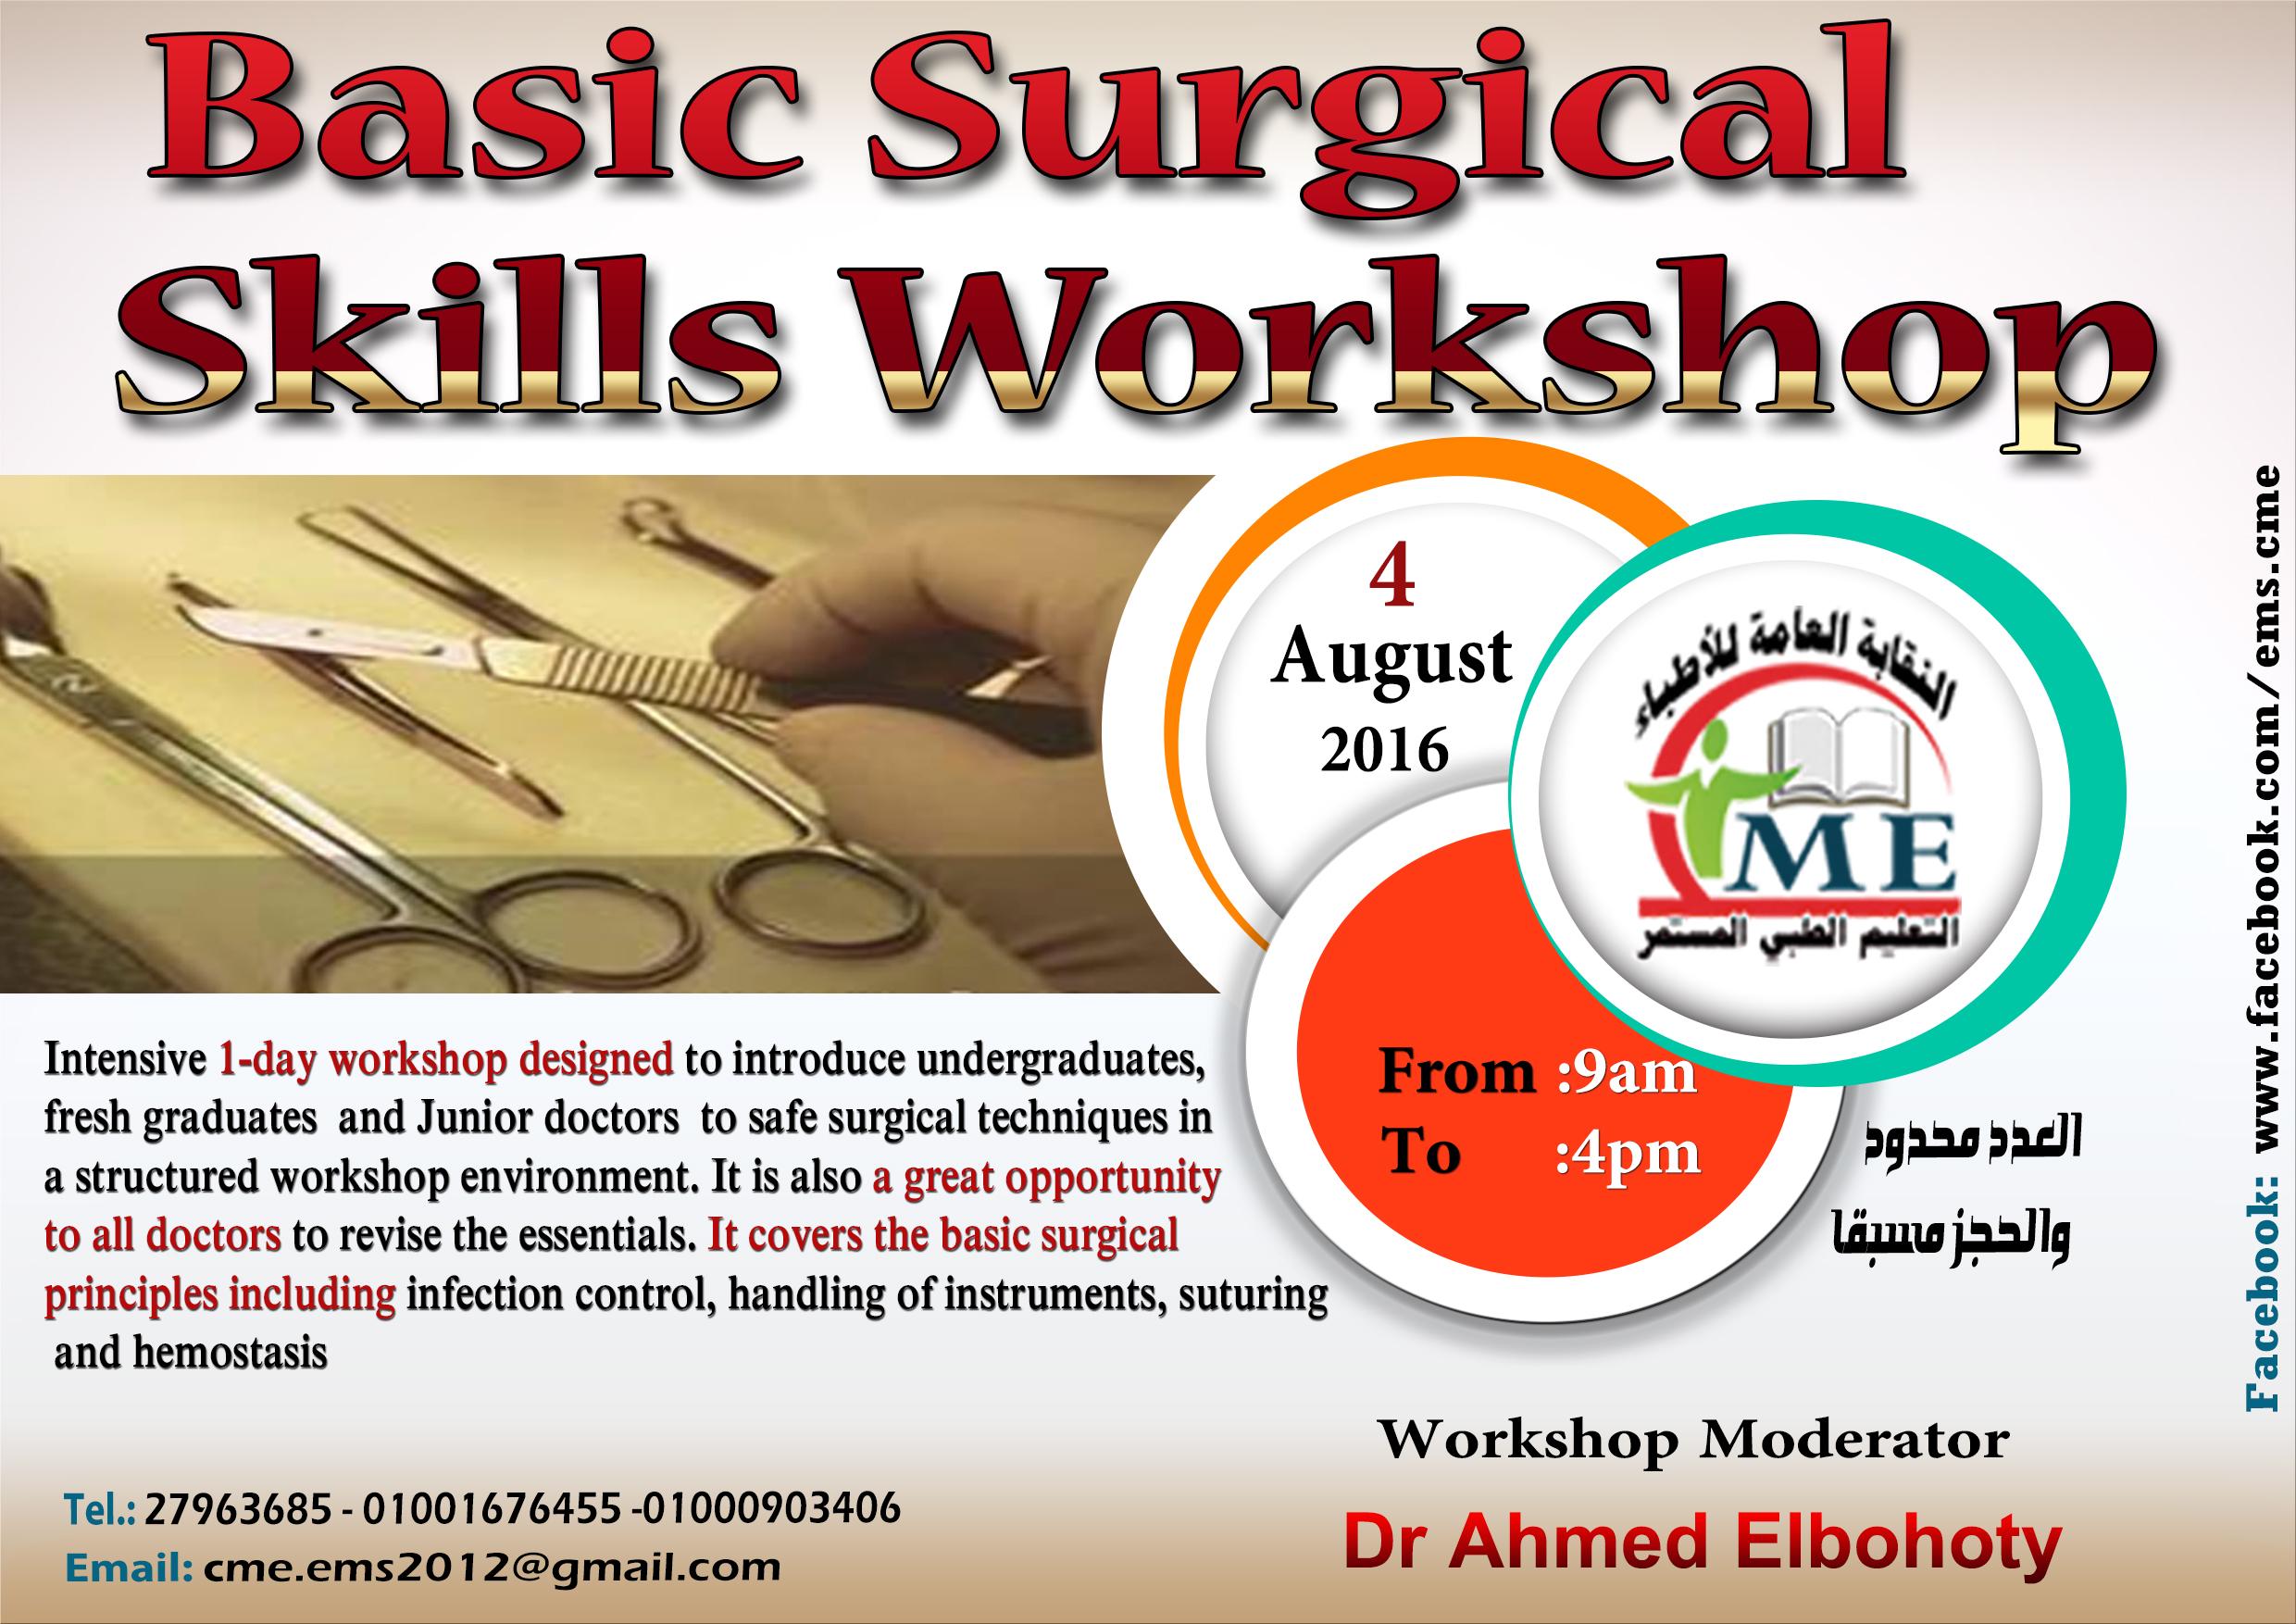 Basic surgical skills workshop